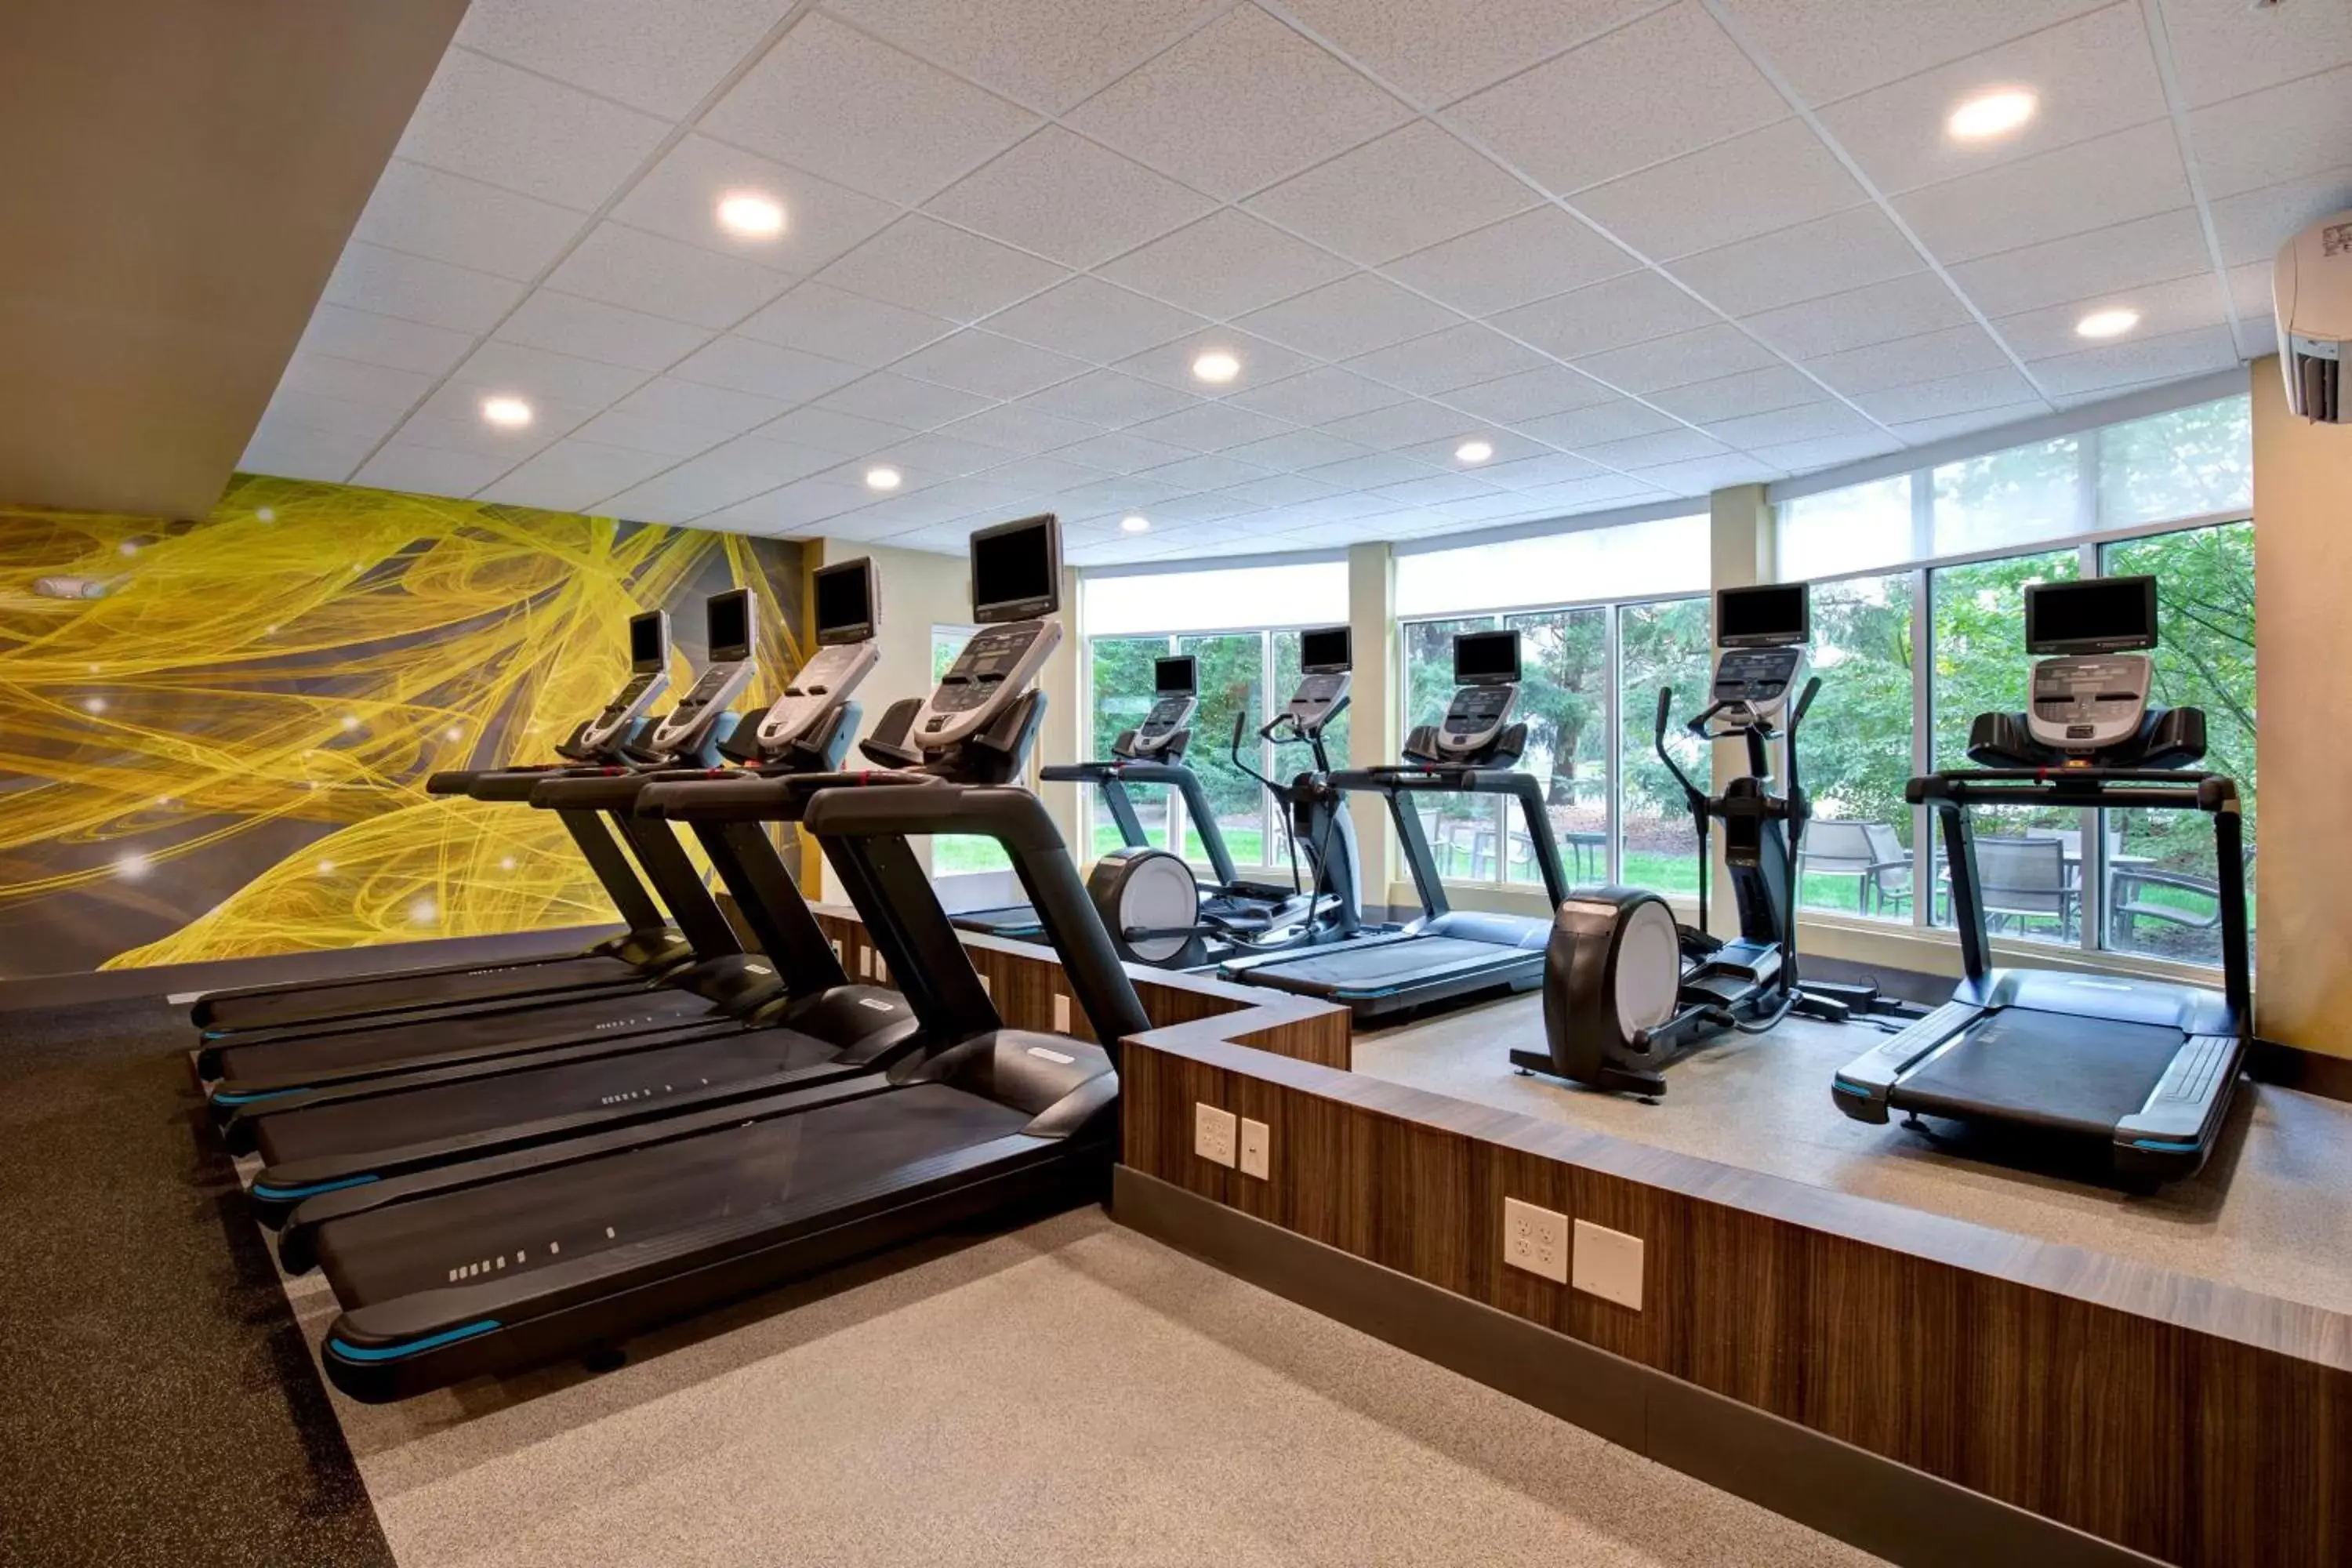 Fitness centre/facilities, Fitness Center/Facilities in Hilton Garden Inn Portland/Beaverton